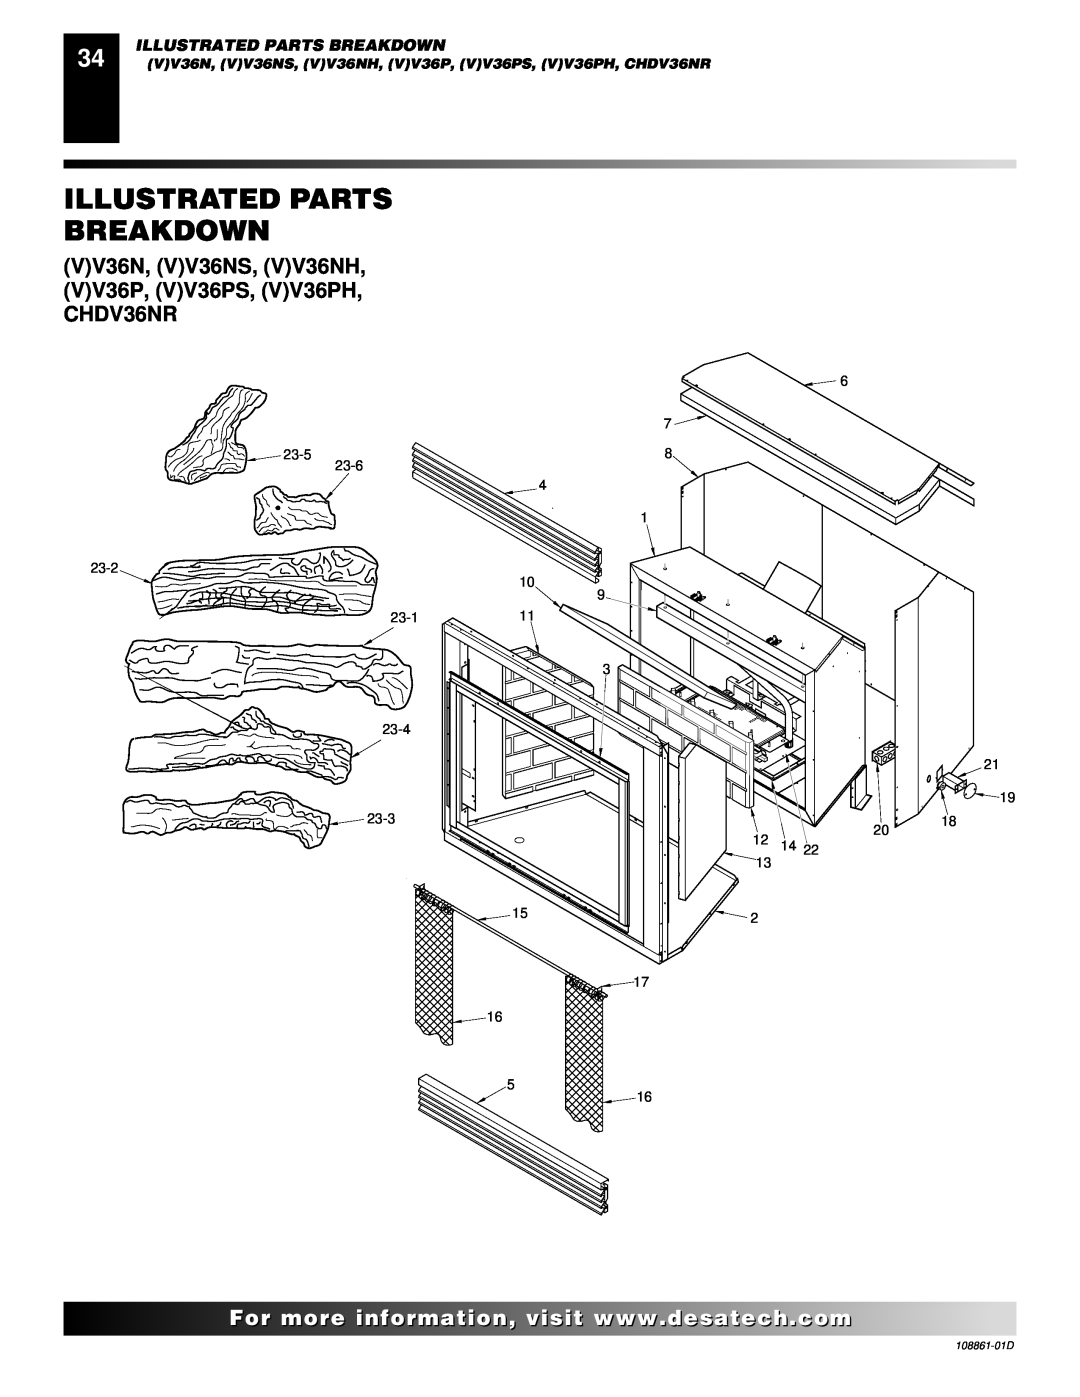 Desa CHDV42NR, (V)V42P, (V)V42N, (V)V36P, CHDV36NR installation manual Illustrated Parts Breakdown 